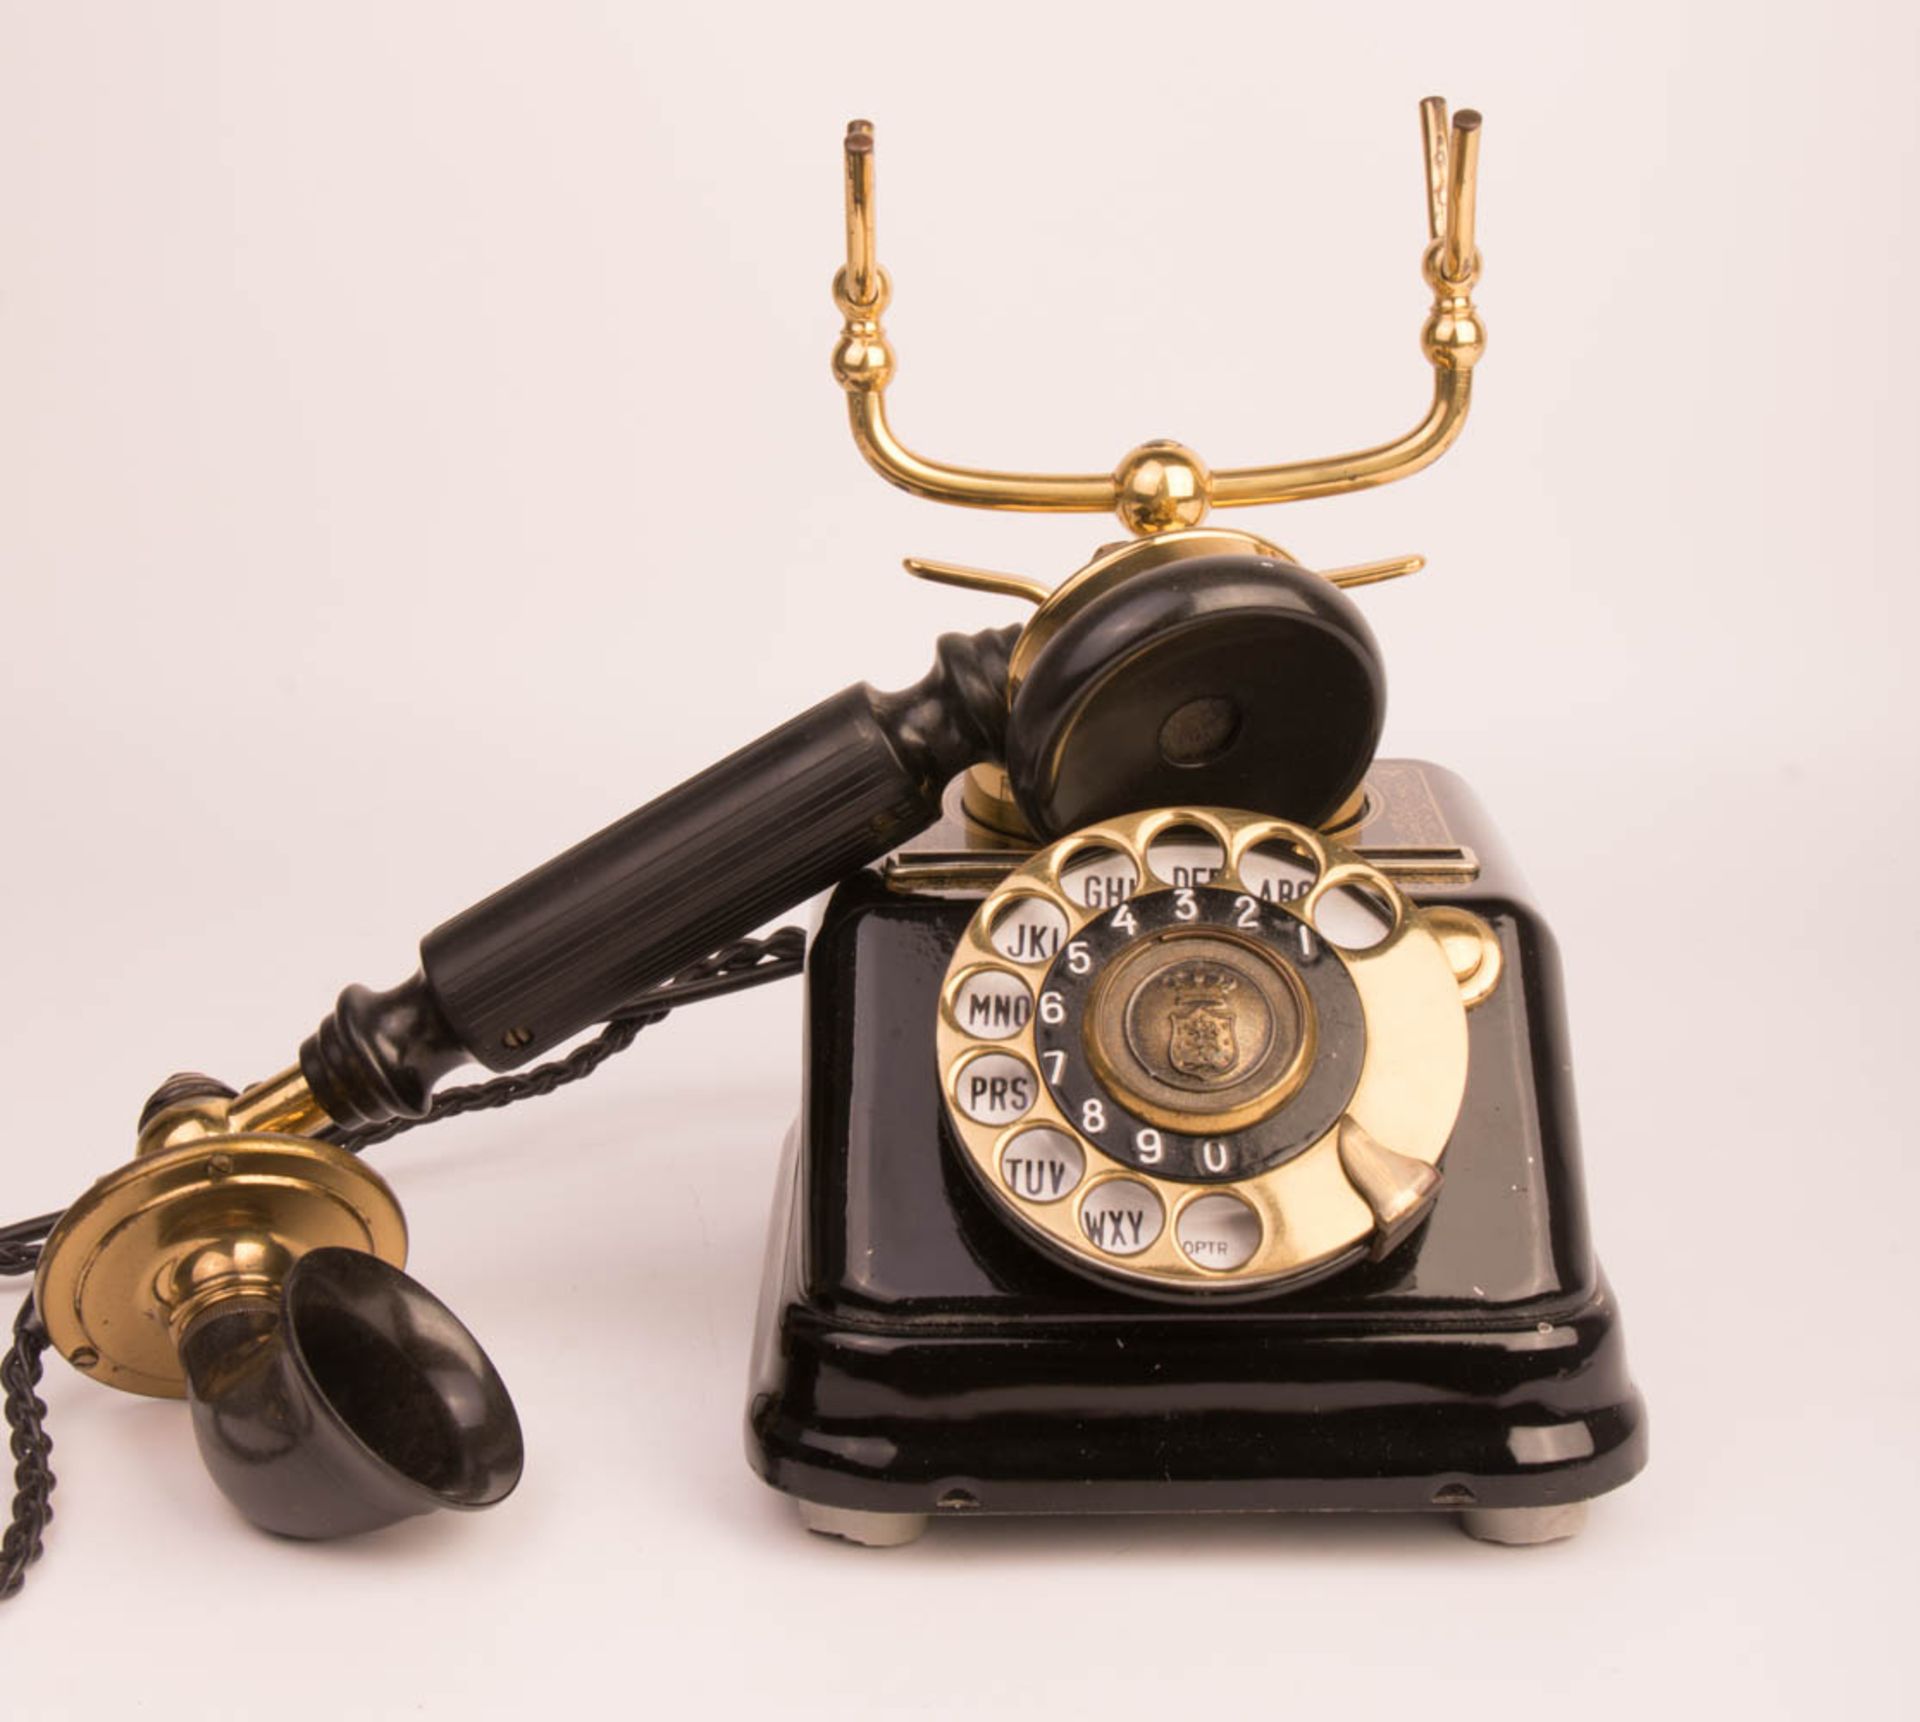 Copenhagen Expoga dial telephone in black and gold, 20th c. - Image 6 of 8